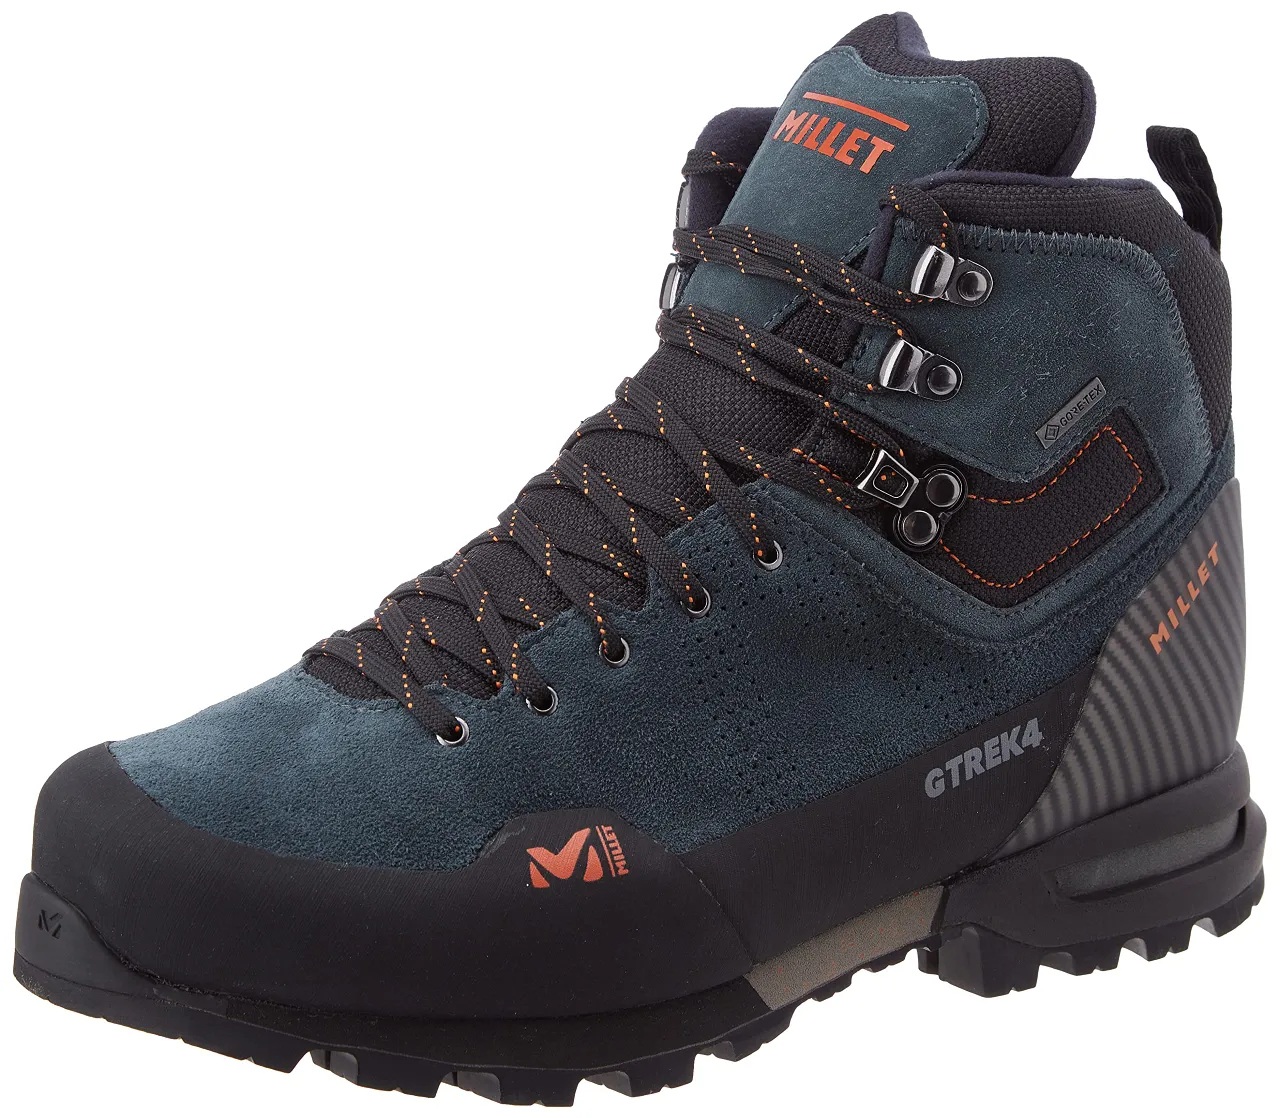 Millet Men's G Trek 4 GTX M Climbing Shoe